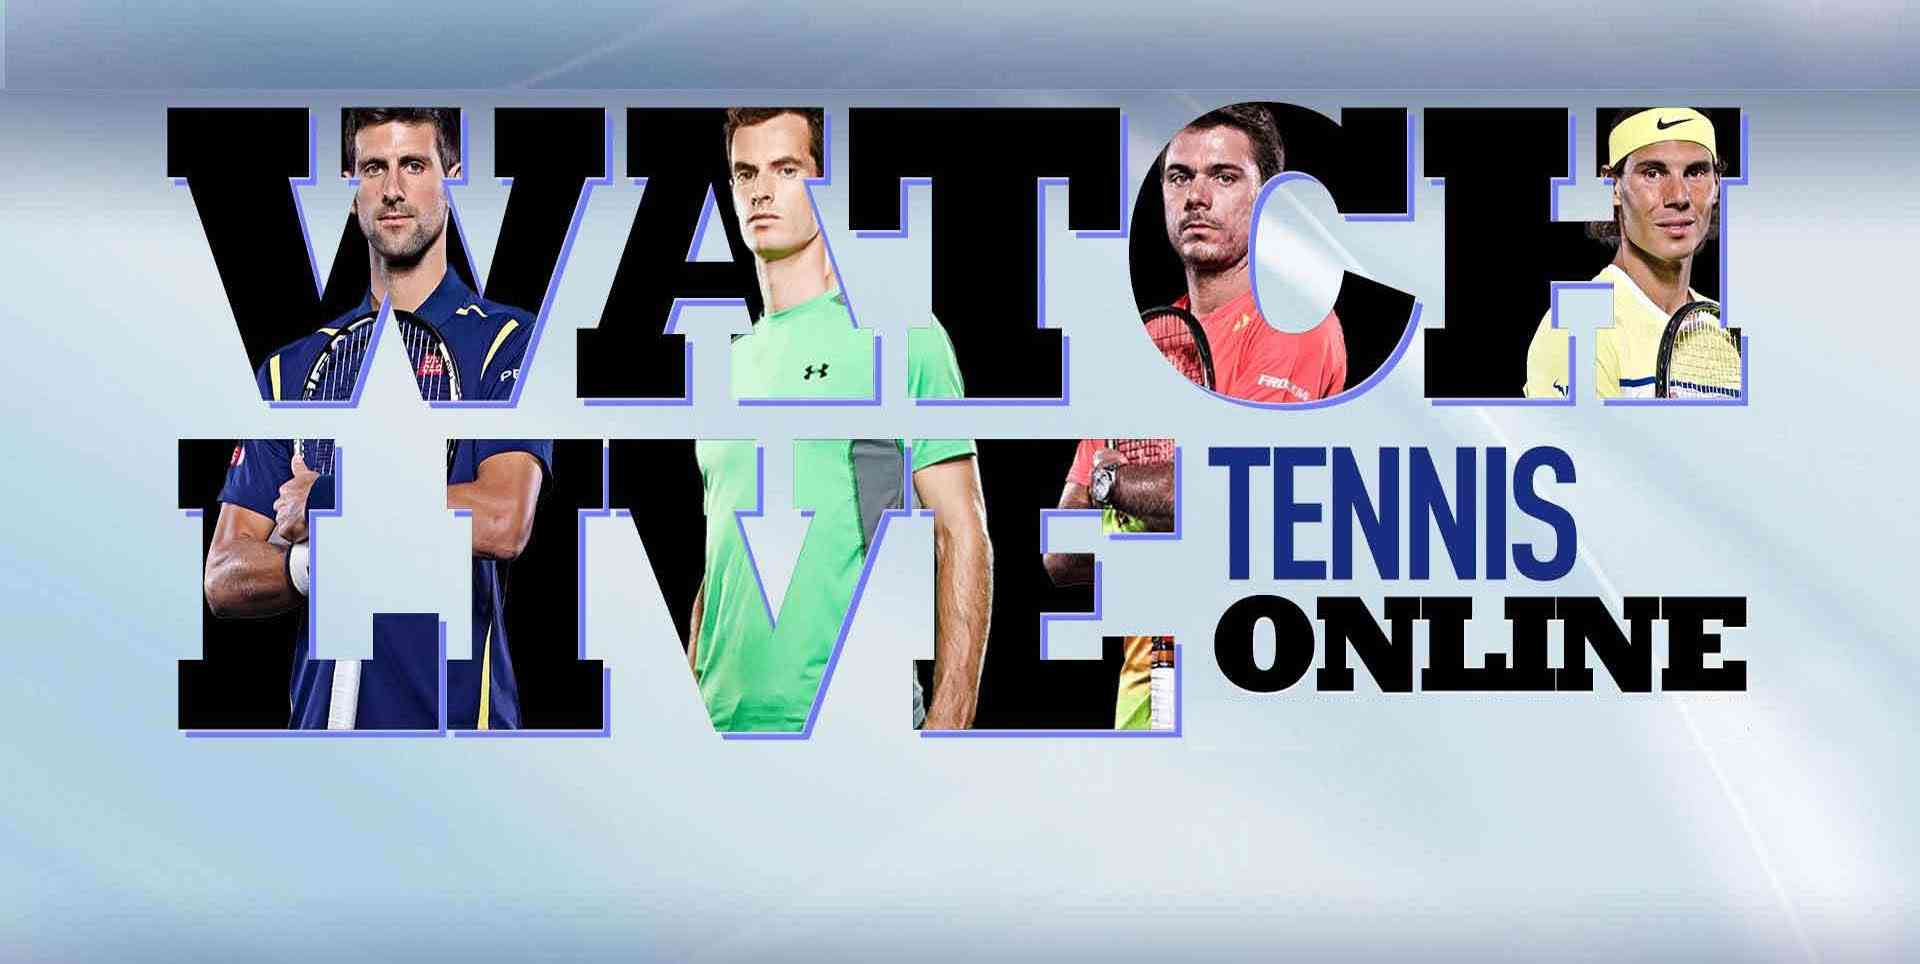 Geneva Open Tennis Live Stream